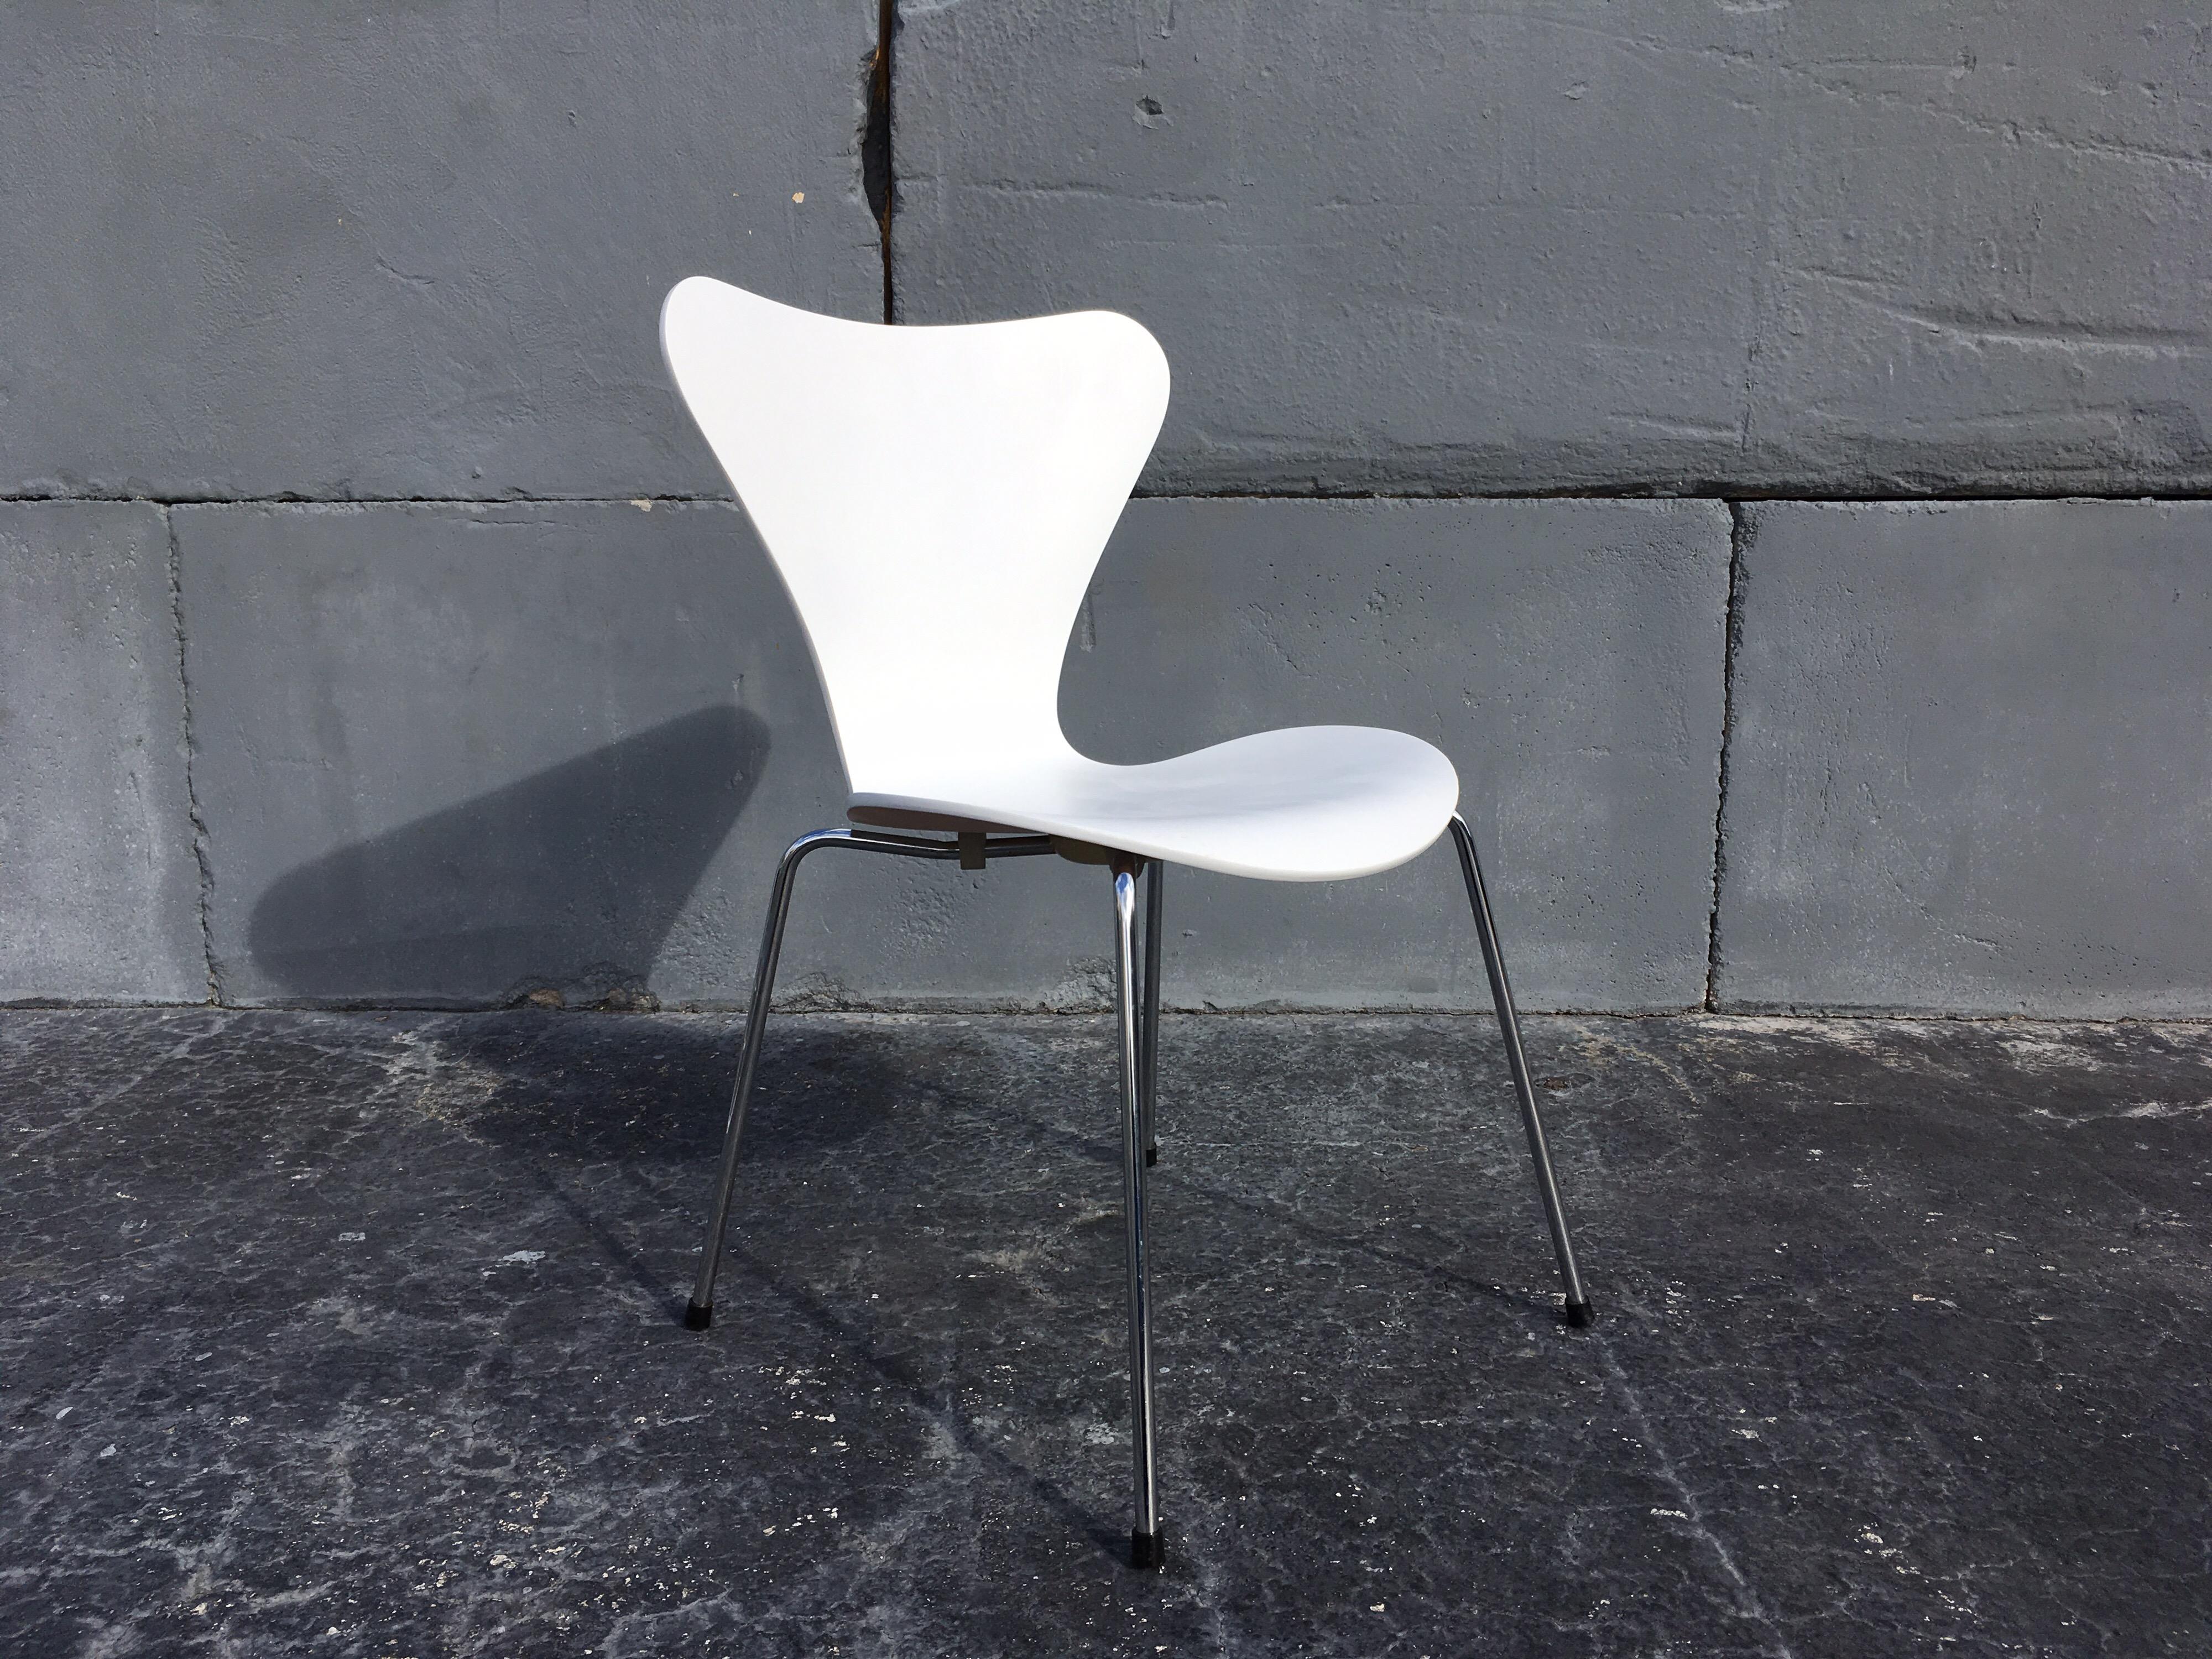 Six original Arne Jacobsen chairs in satin white, made by Fritz Hansen.